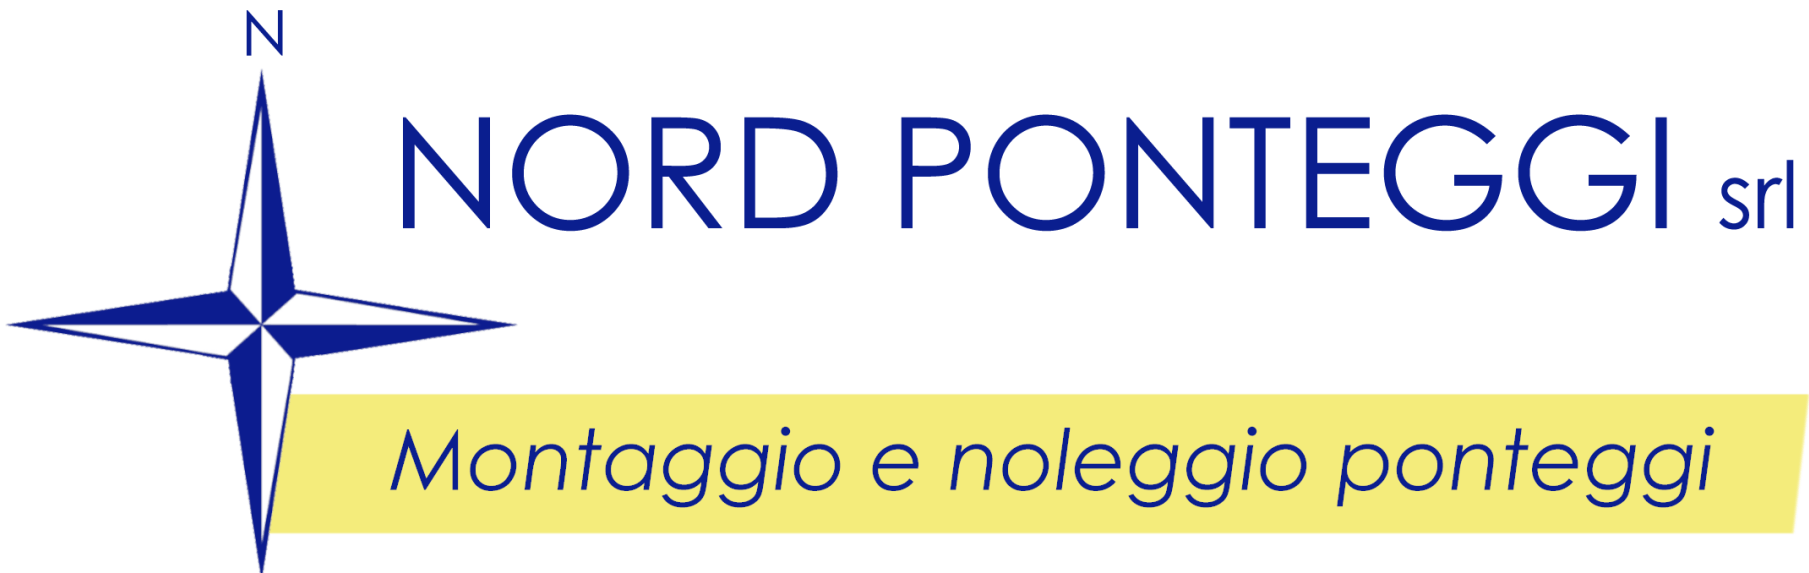 NORD PONTEGGI - IMPALCATURE LOGO